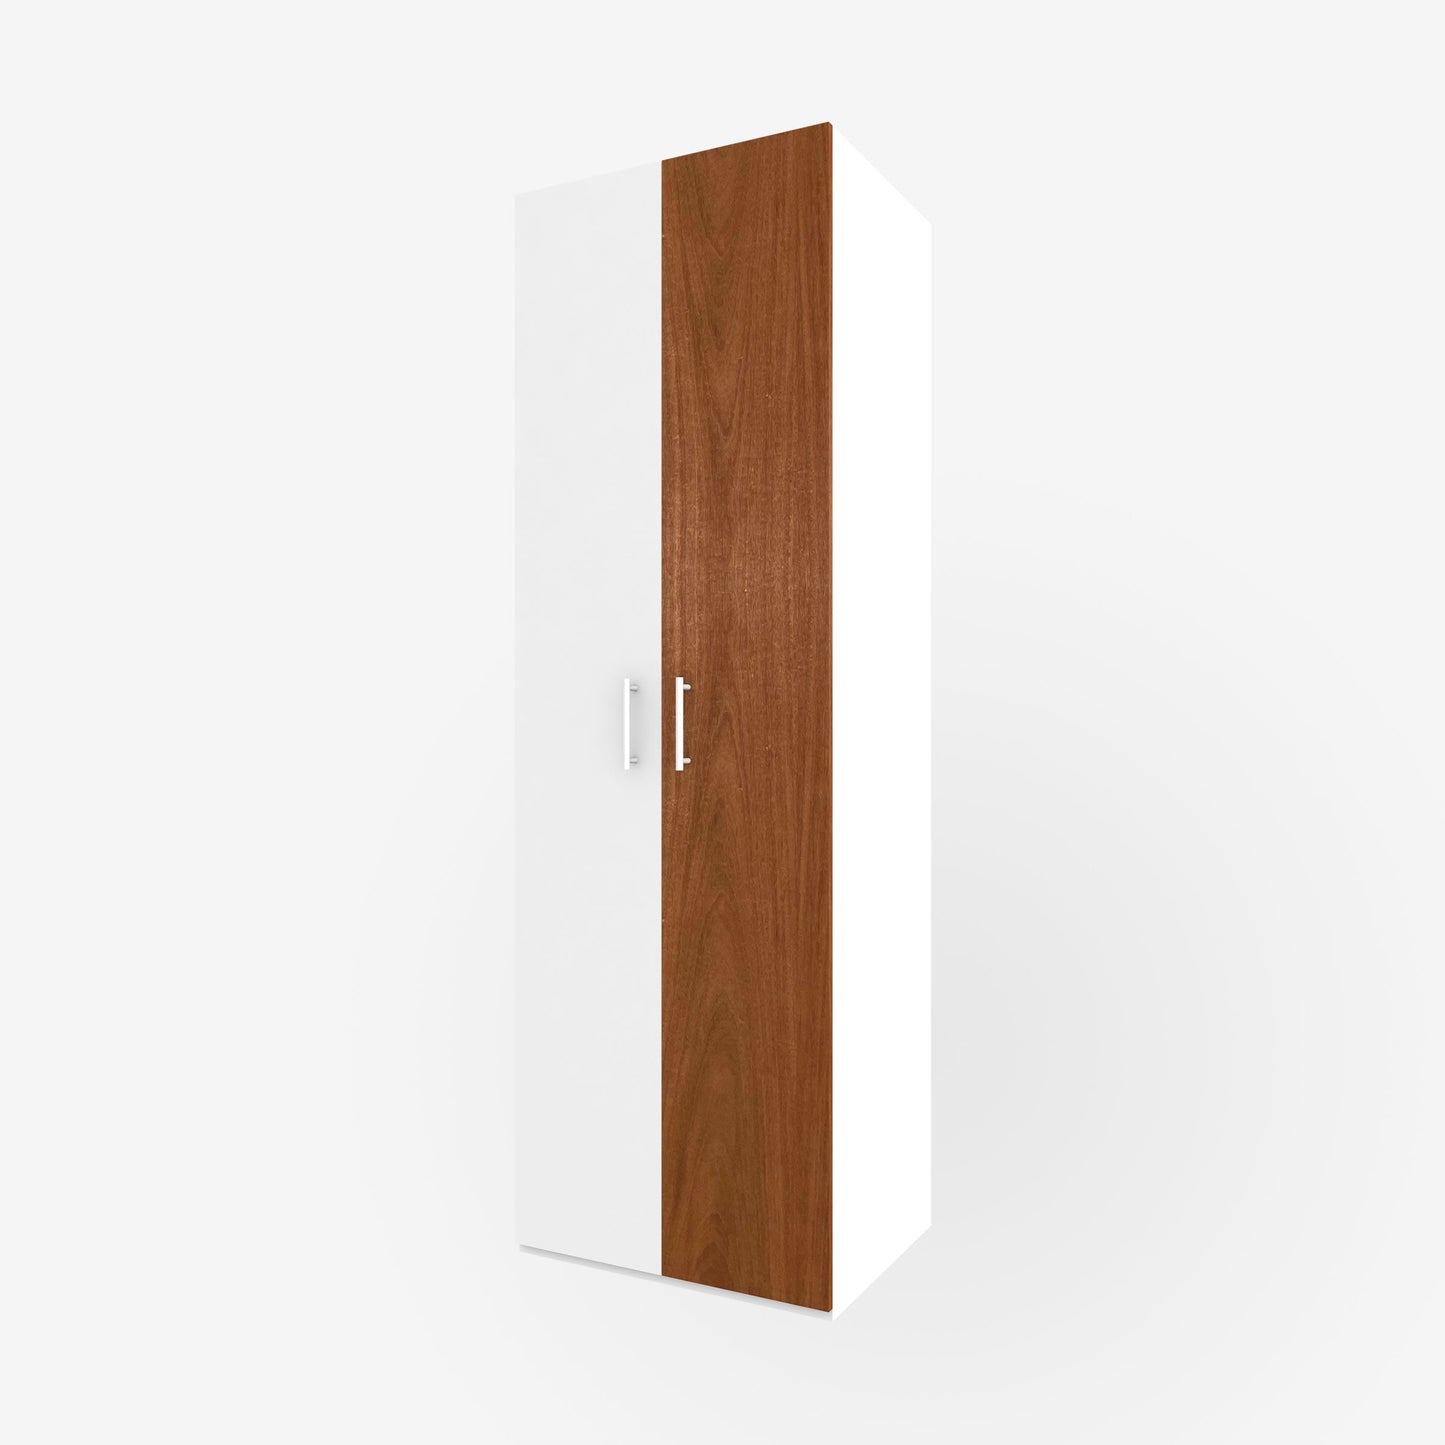 15" x 93" real wood veneer mahogany slab door for Ikea or Swedeboxx pax closet cabinet